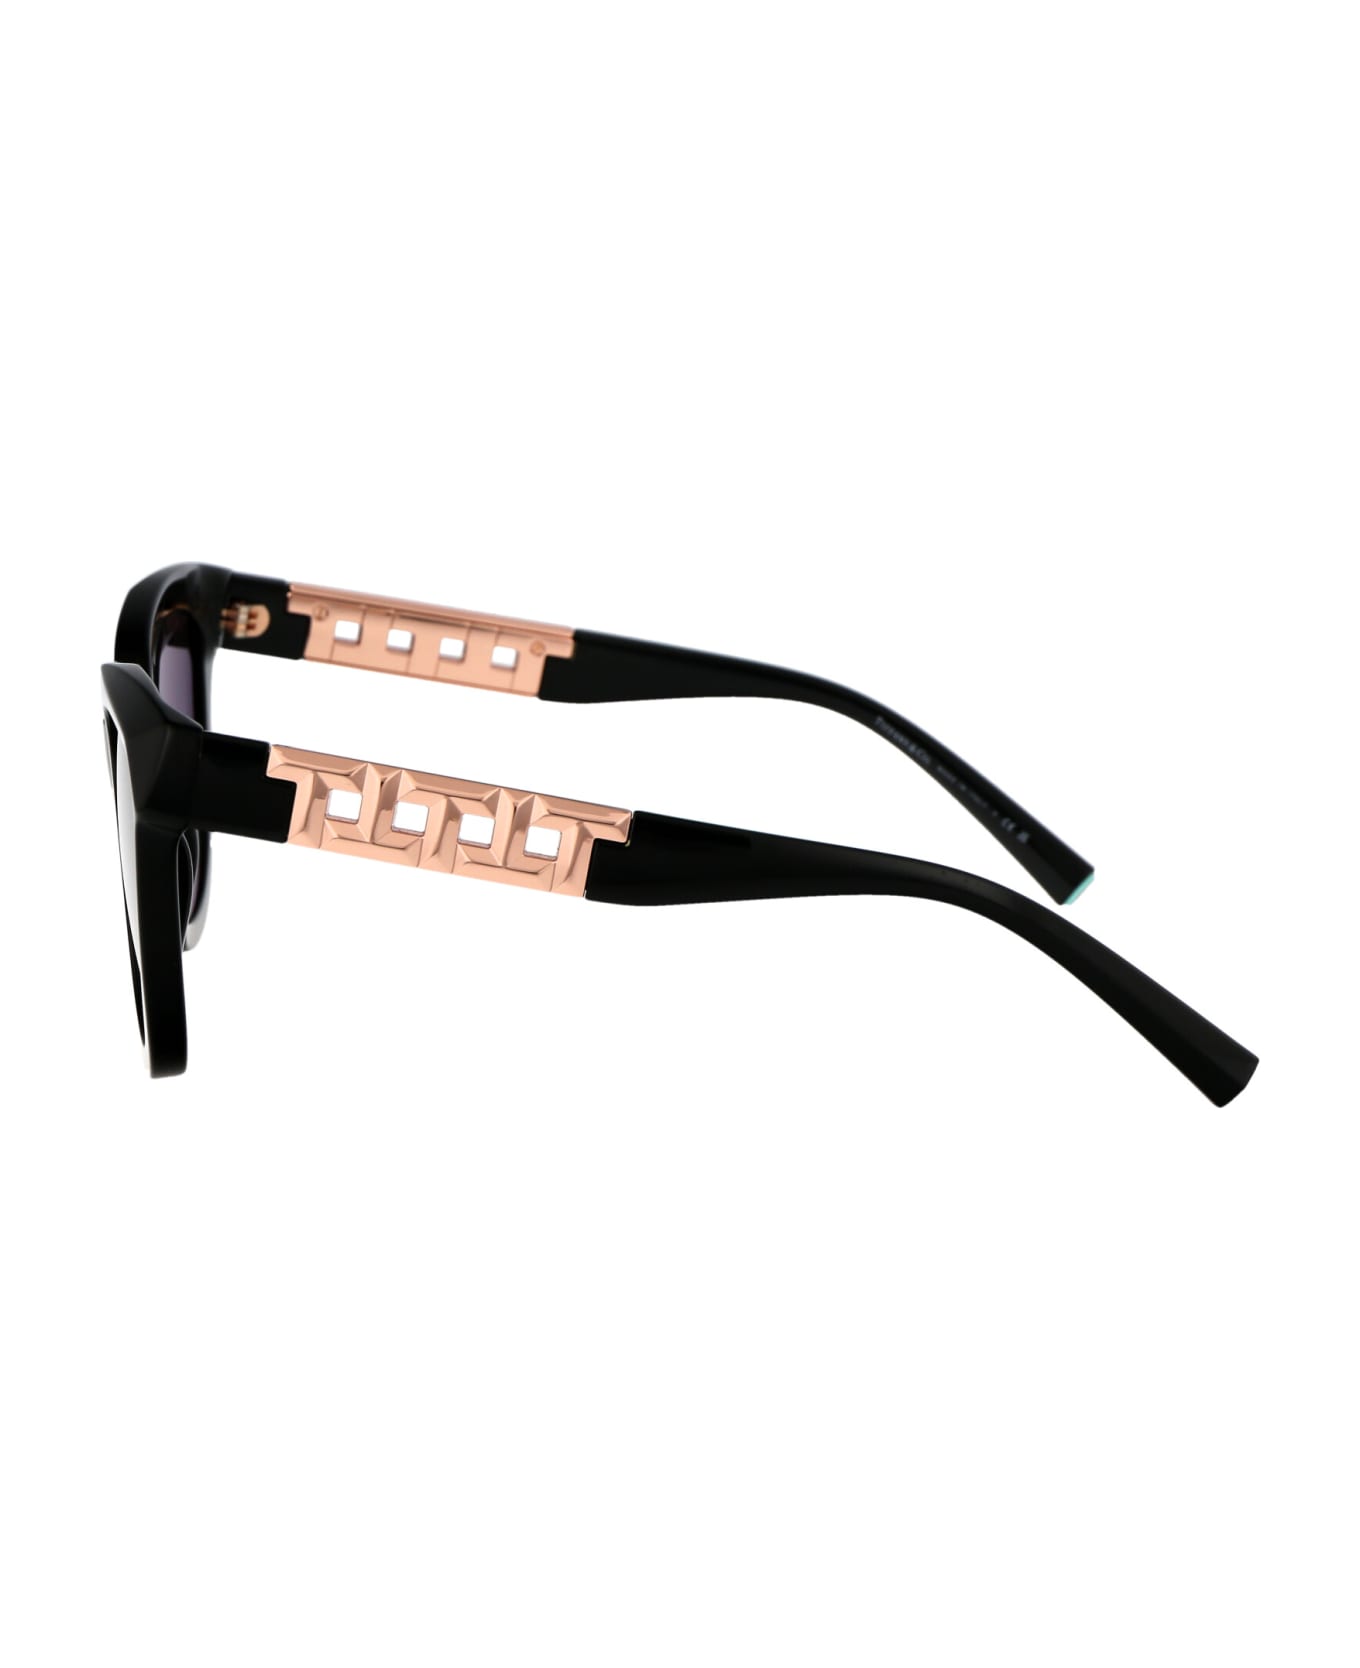 Tiffany & Co. 0tf4215 Sunglasses - 80013C Black